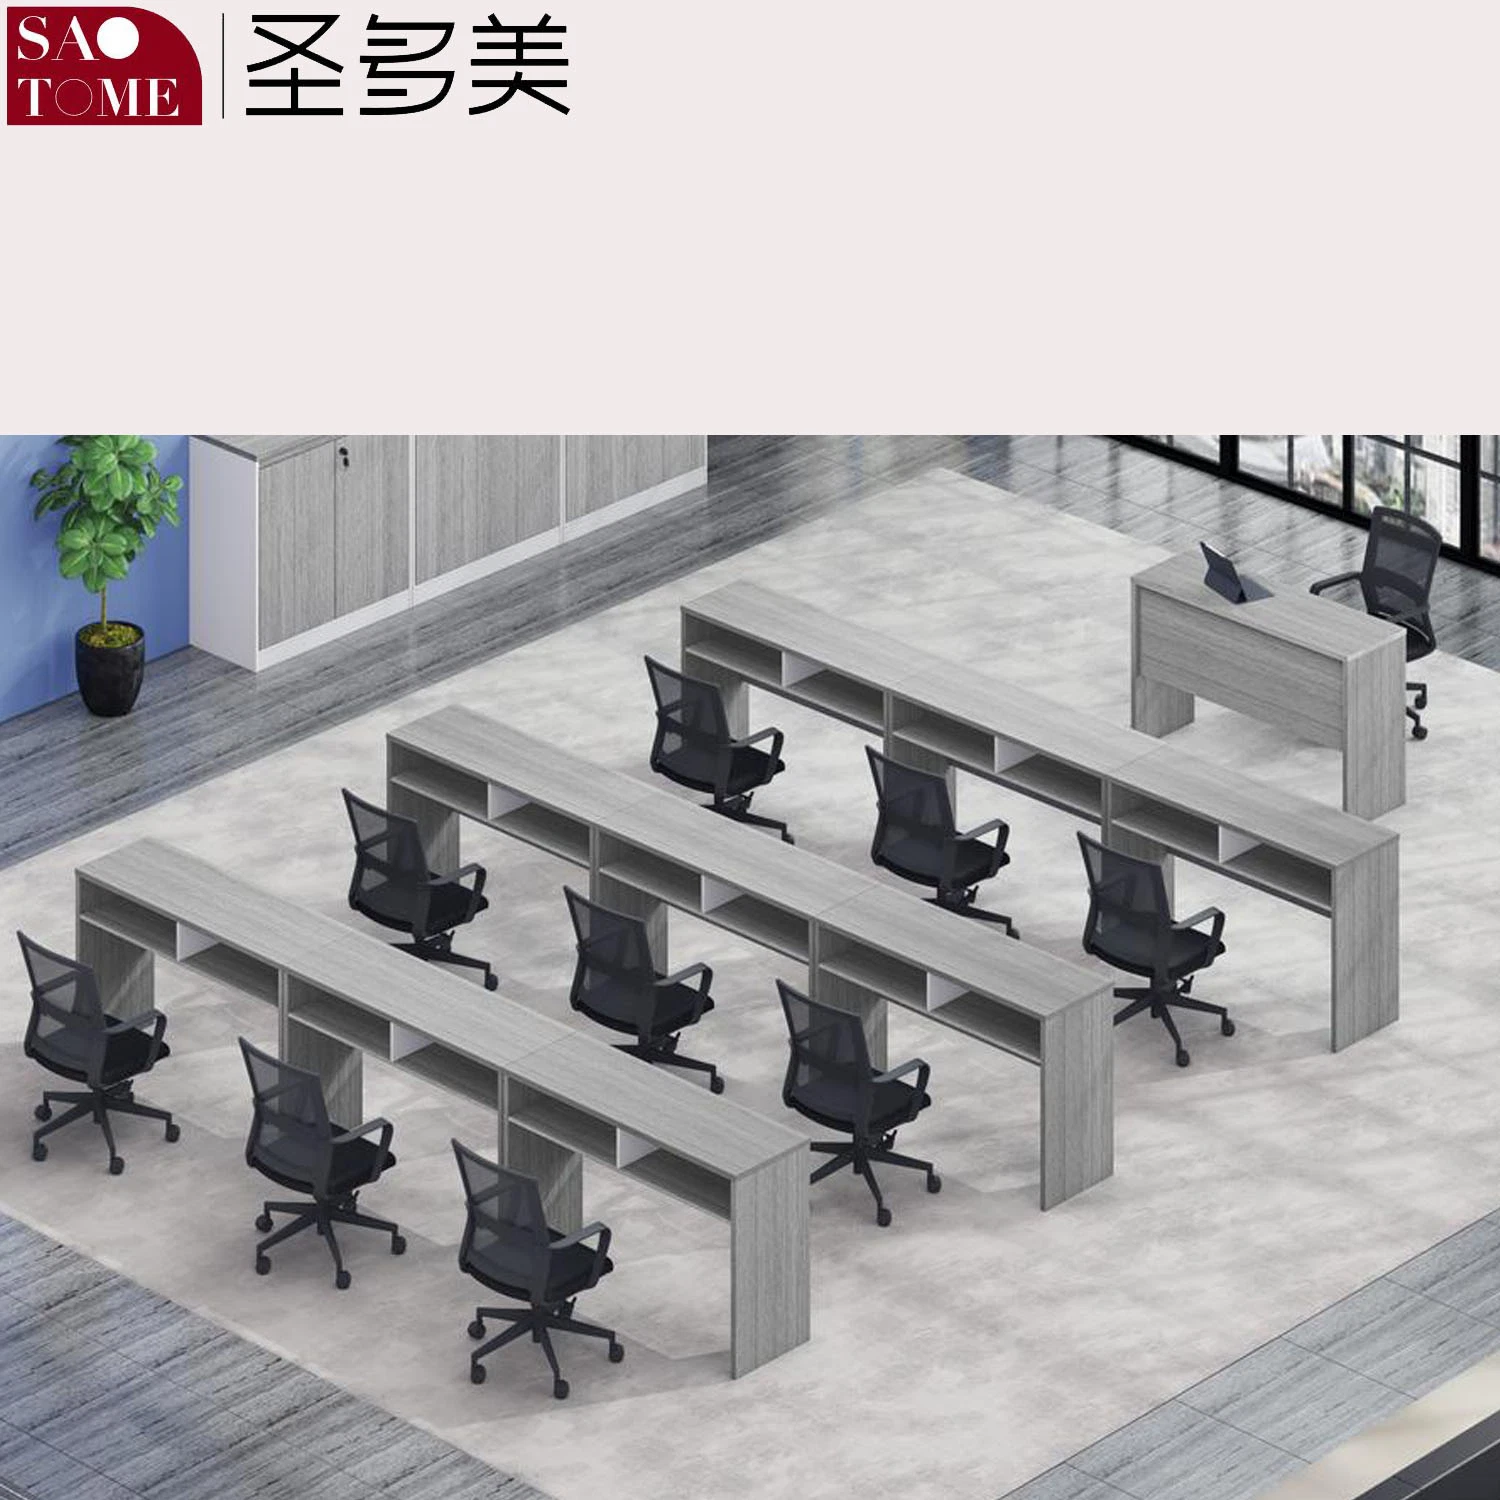 Modern Office Supplies Office Furniture Desk Executive Desk Executive Table